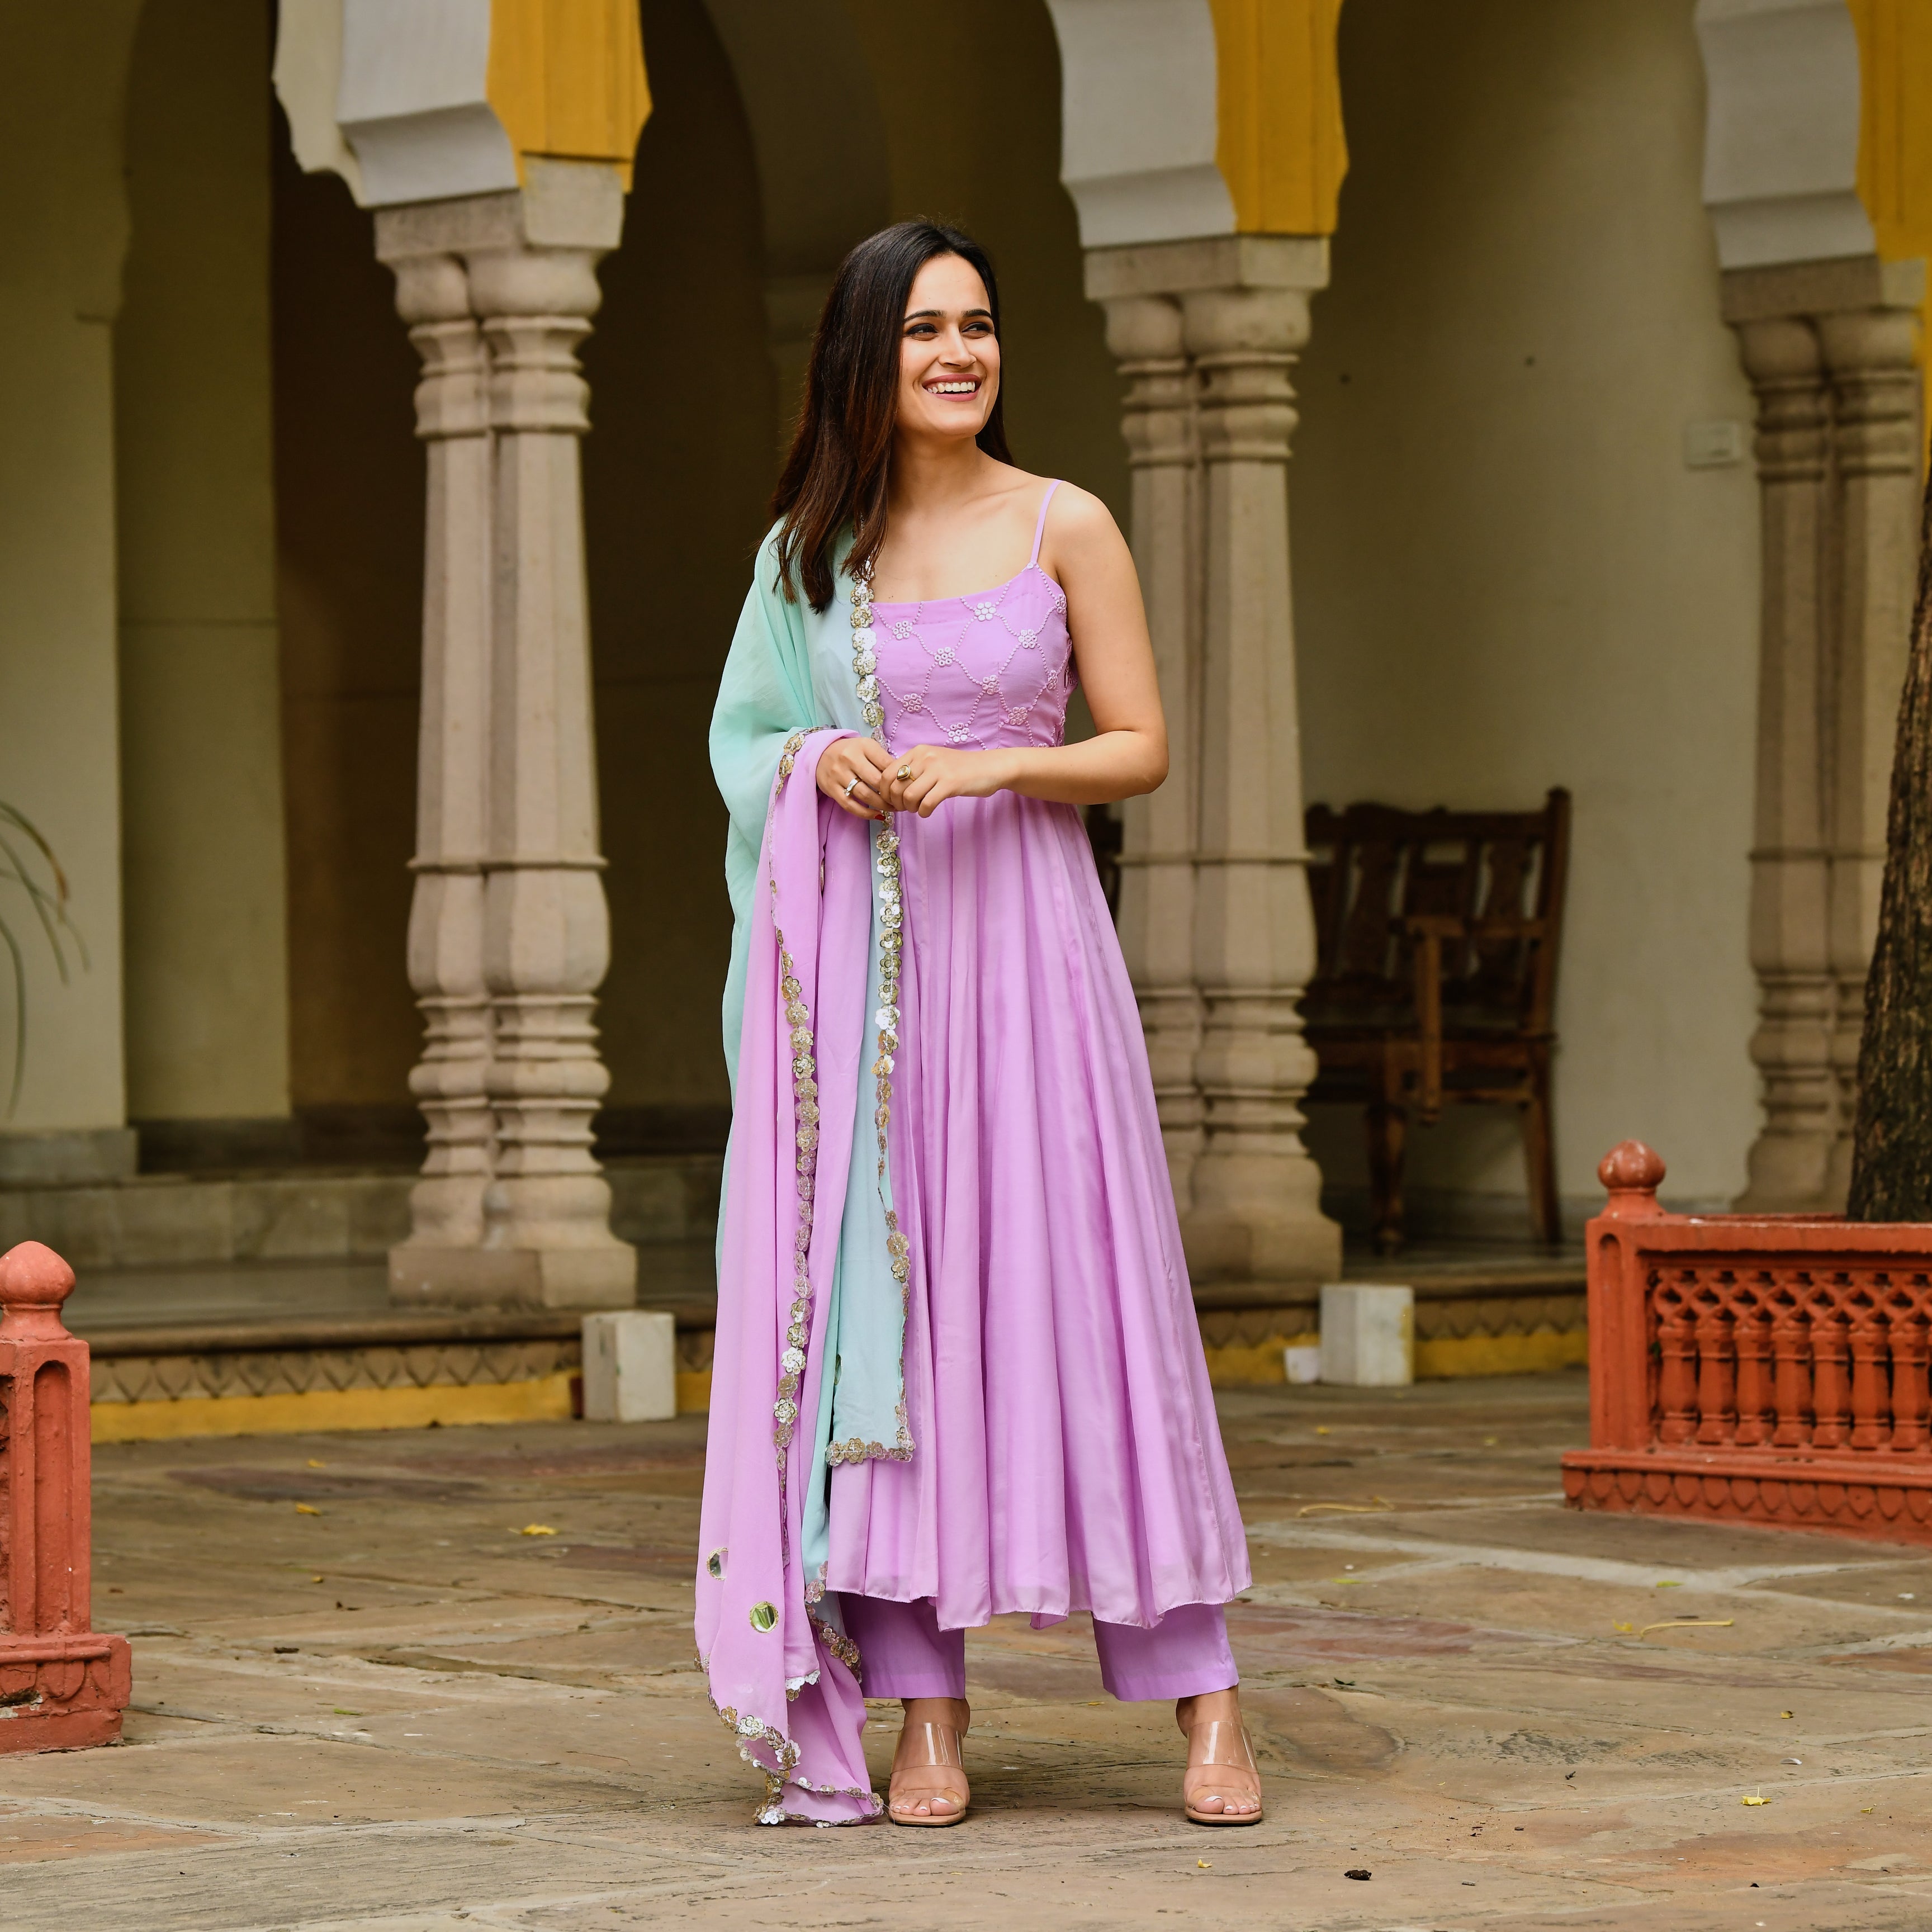 Sayuri Designer Noor Gold 122 Georgette Dress, Ethnic Wear, Anarkali Gown  Salwar Kameez at Rs 1250 | Anarkali Salwar Kameez in Surat | ID:  2853073485891